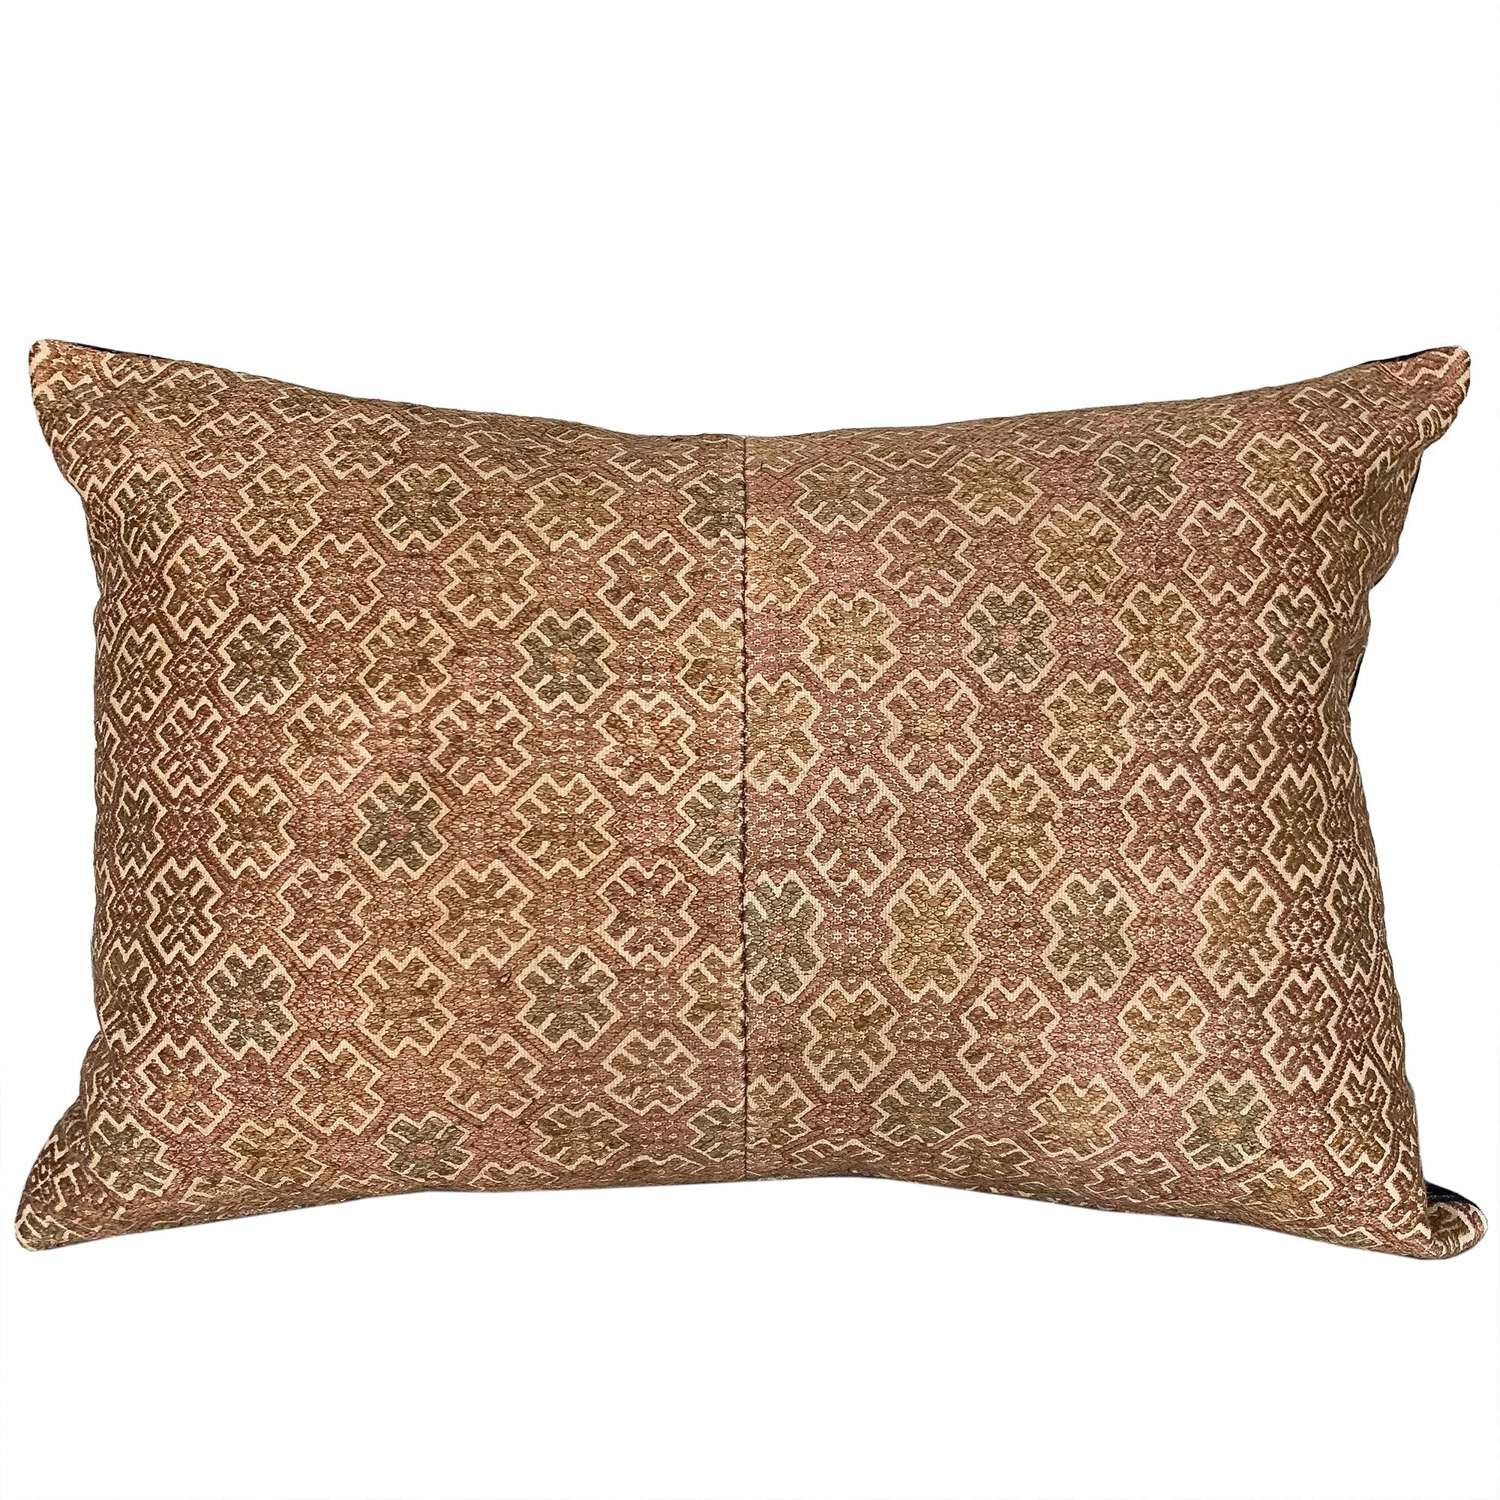 Early Zhuang Cushions, Gold